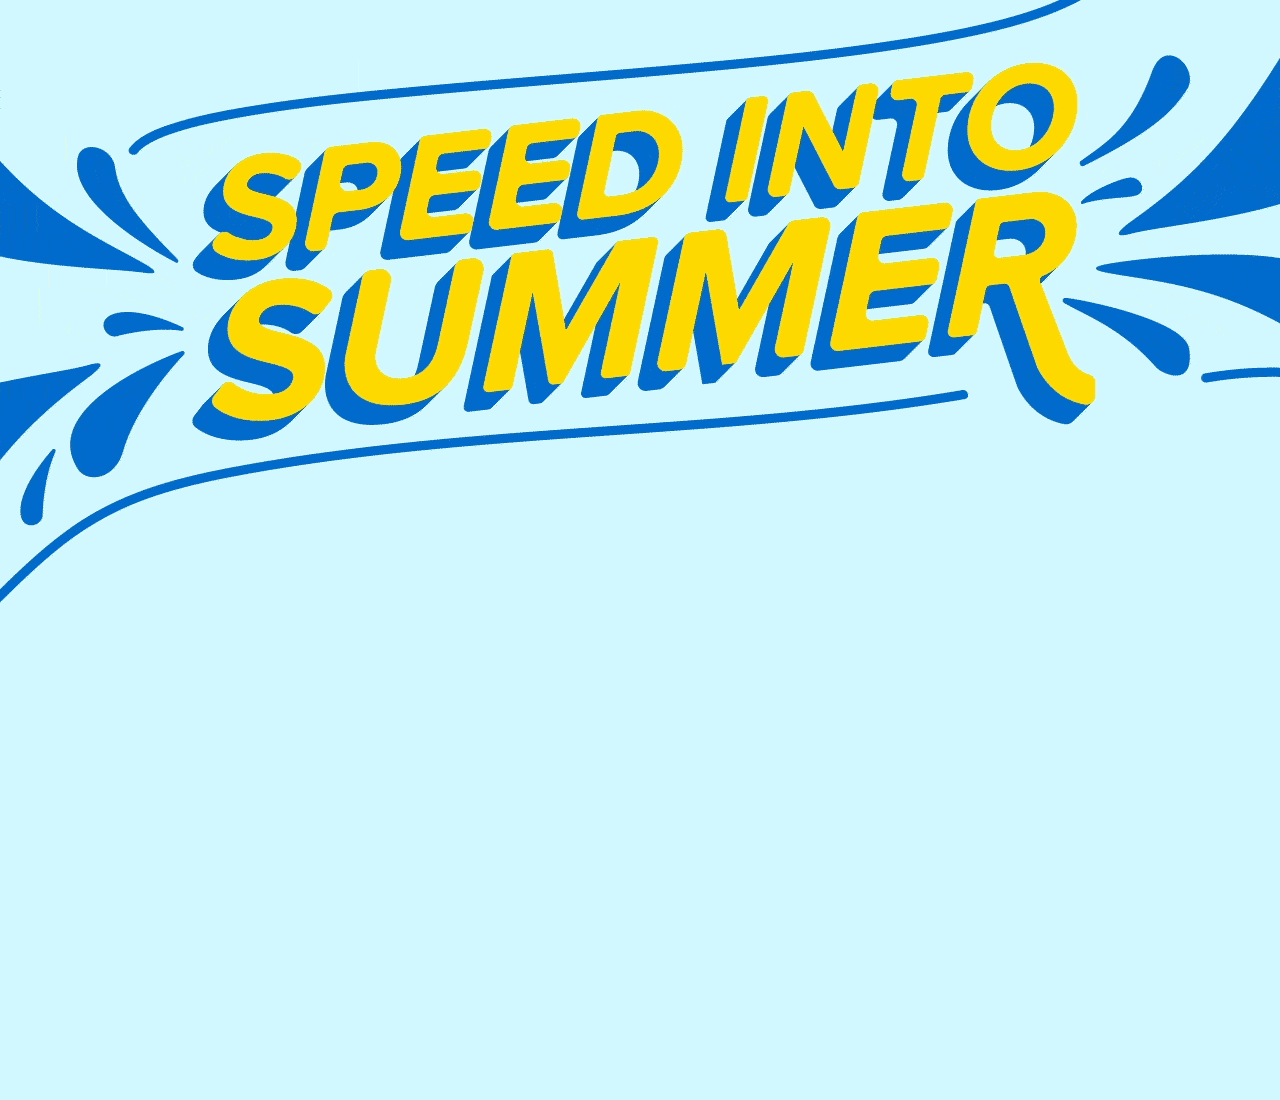 Speed Into Summer